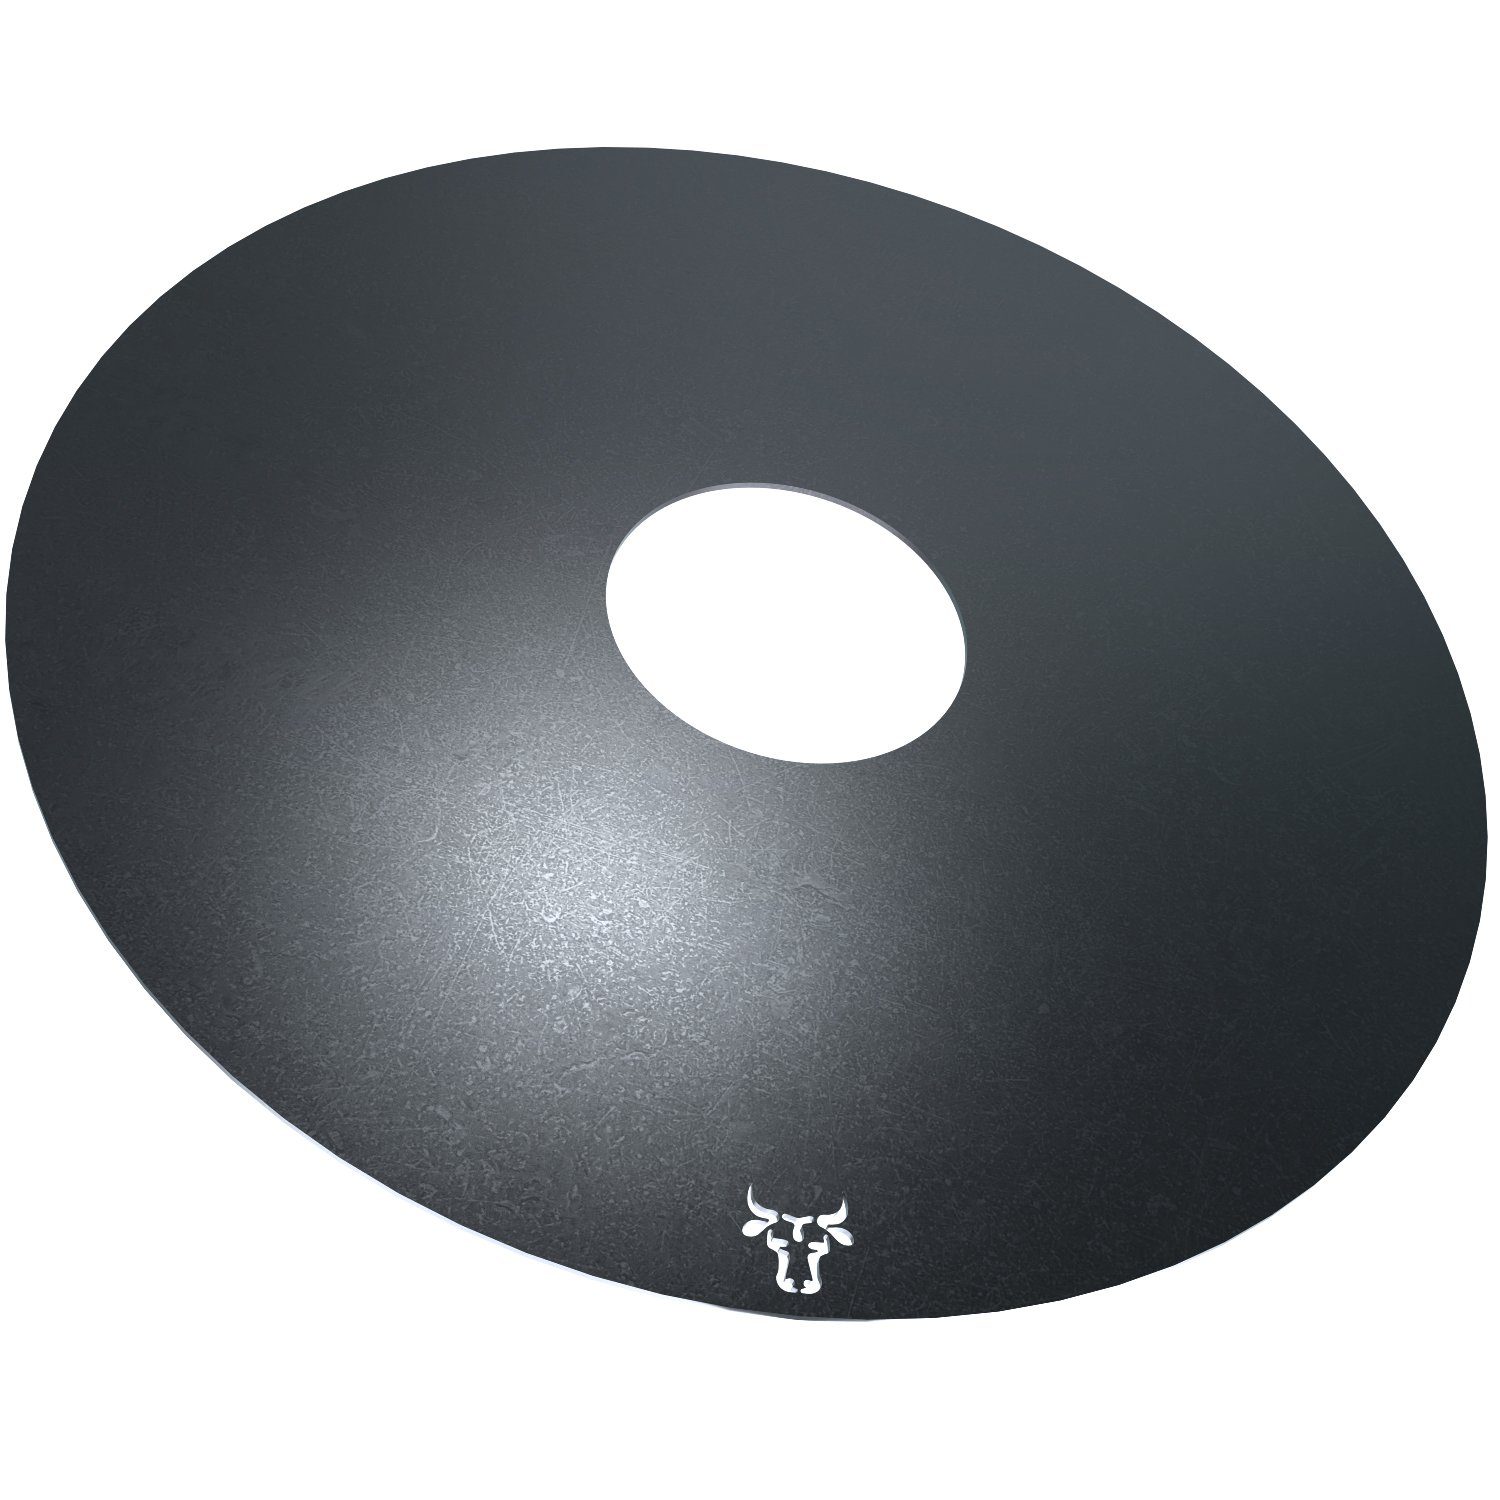 Grillplatte BBQ-Platte Kugelgrill GR01-80 für Grillring Plancha Feuerplatte 80cm tuning-art